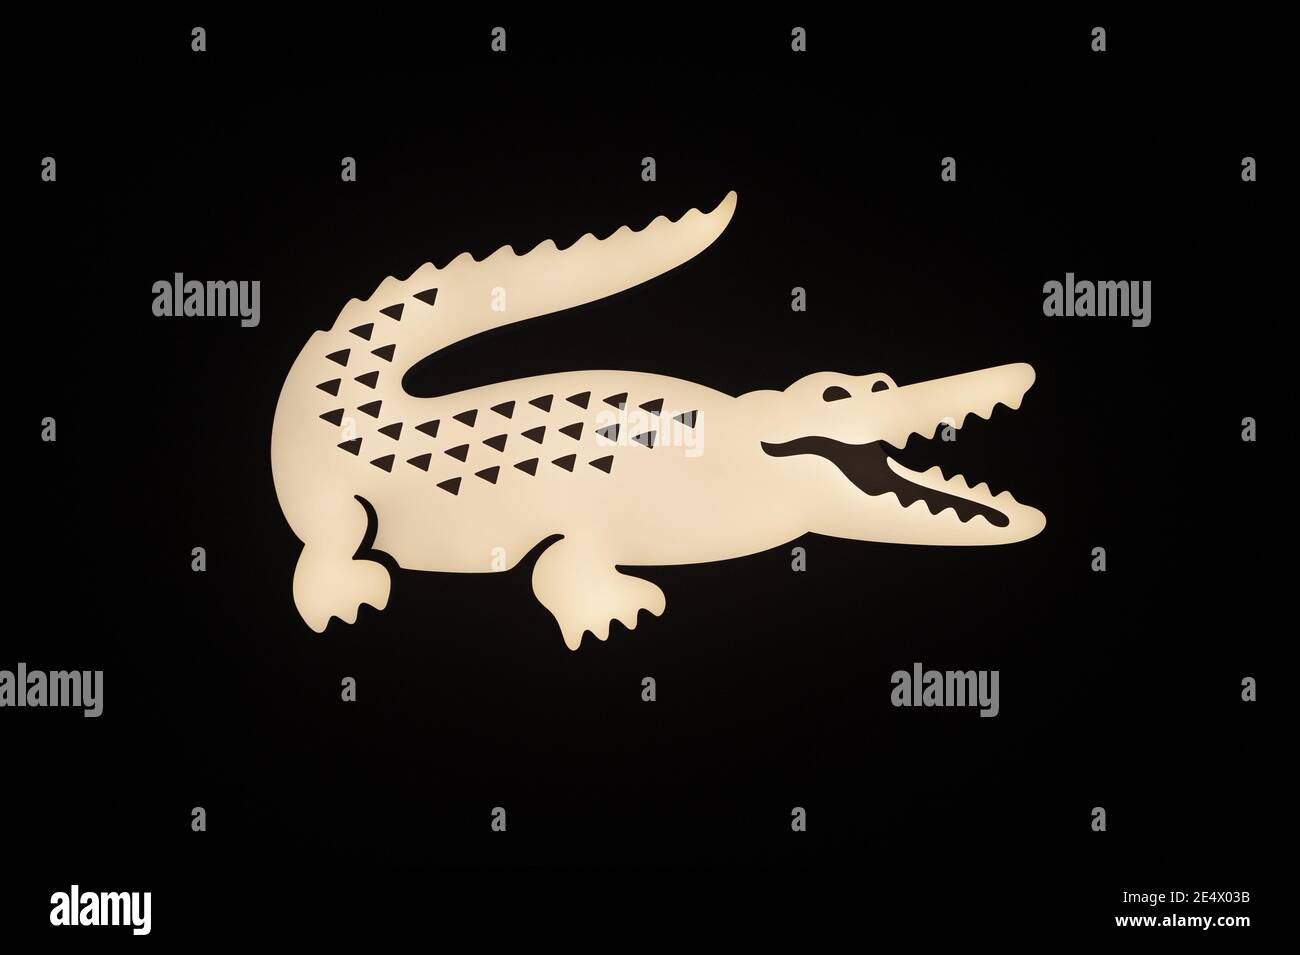 21.01.2021, Singapore, Republic of Singapore, Asia - Illuminated company logo of the iconic brand and fashion label Lacoste with the famous crocodile. Stock Photo